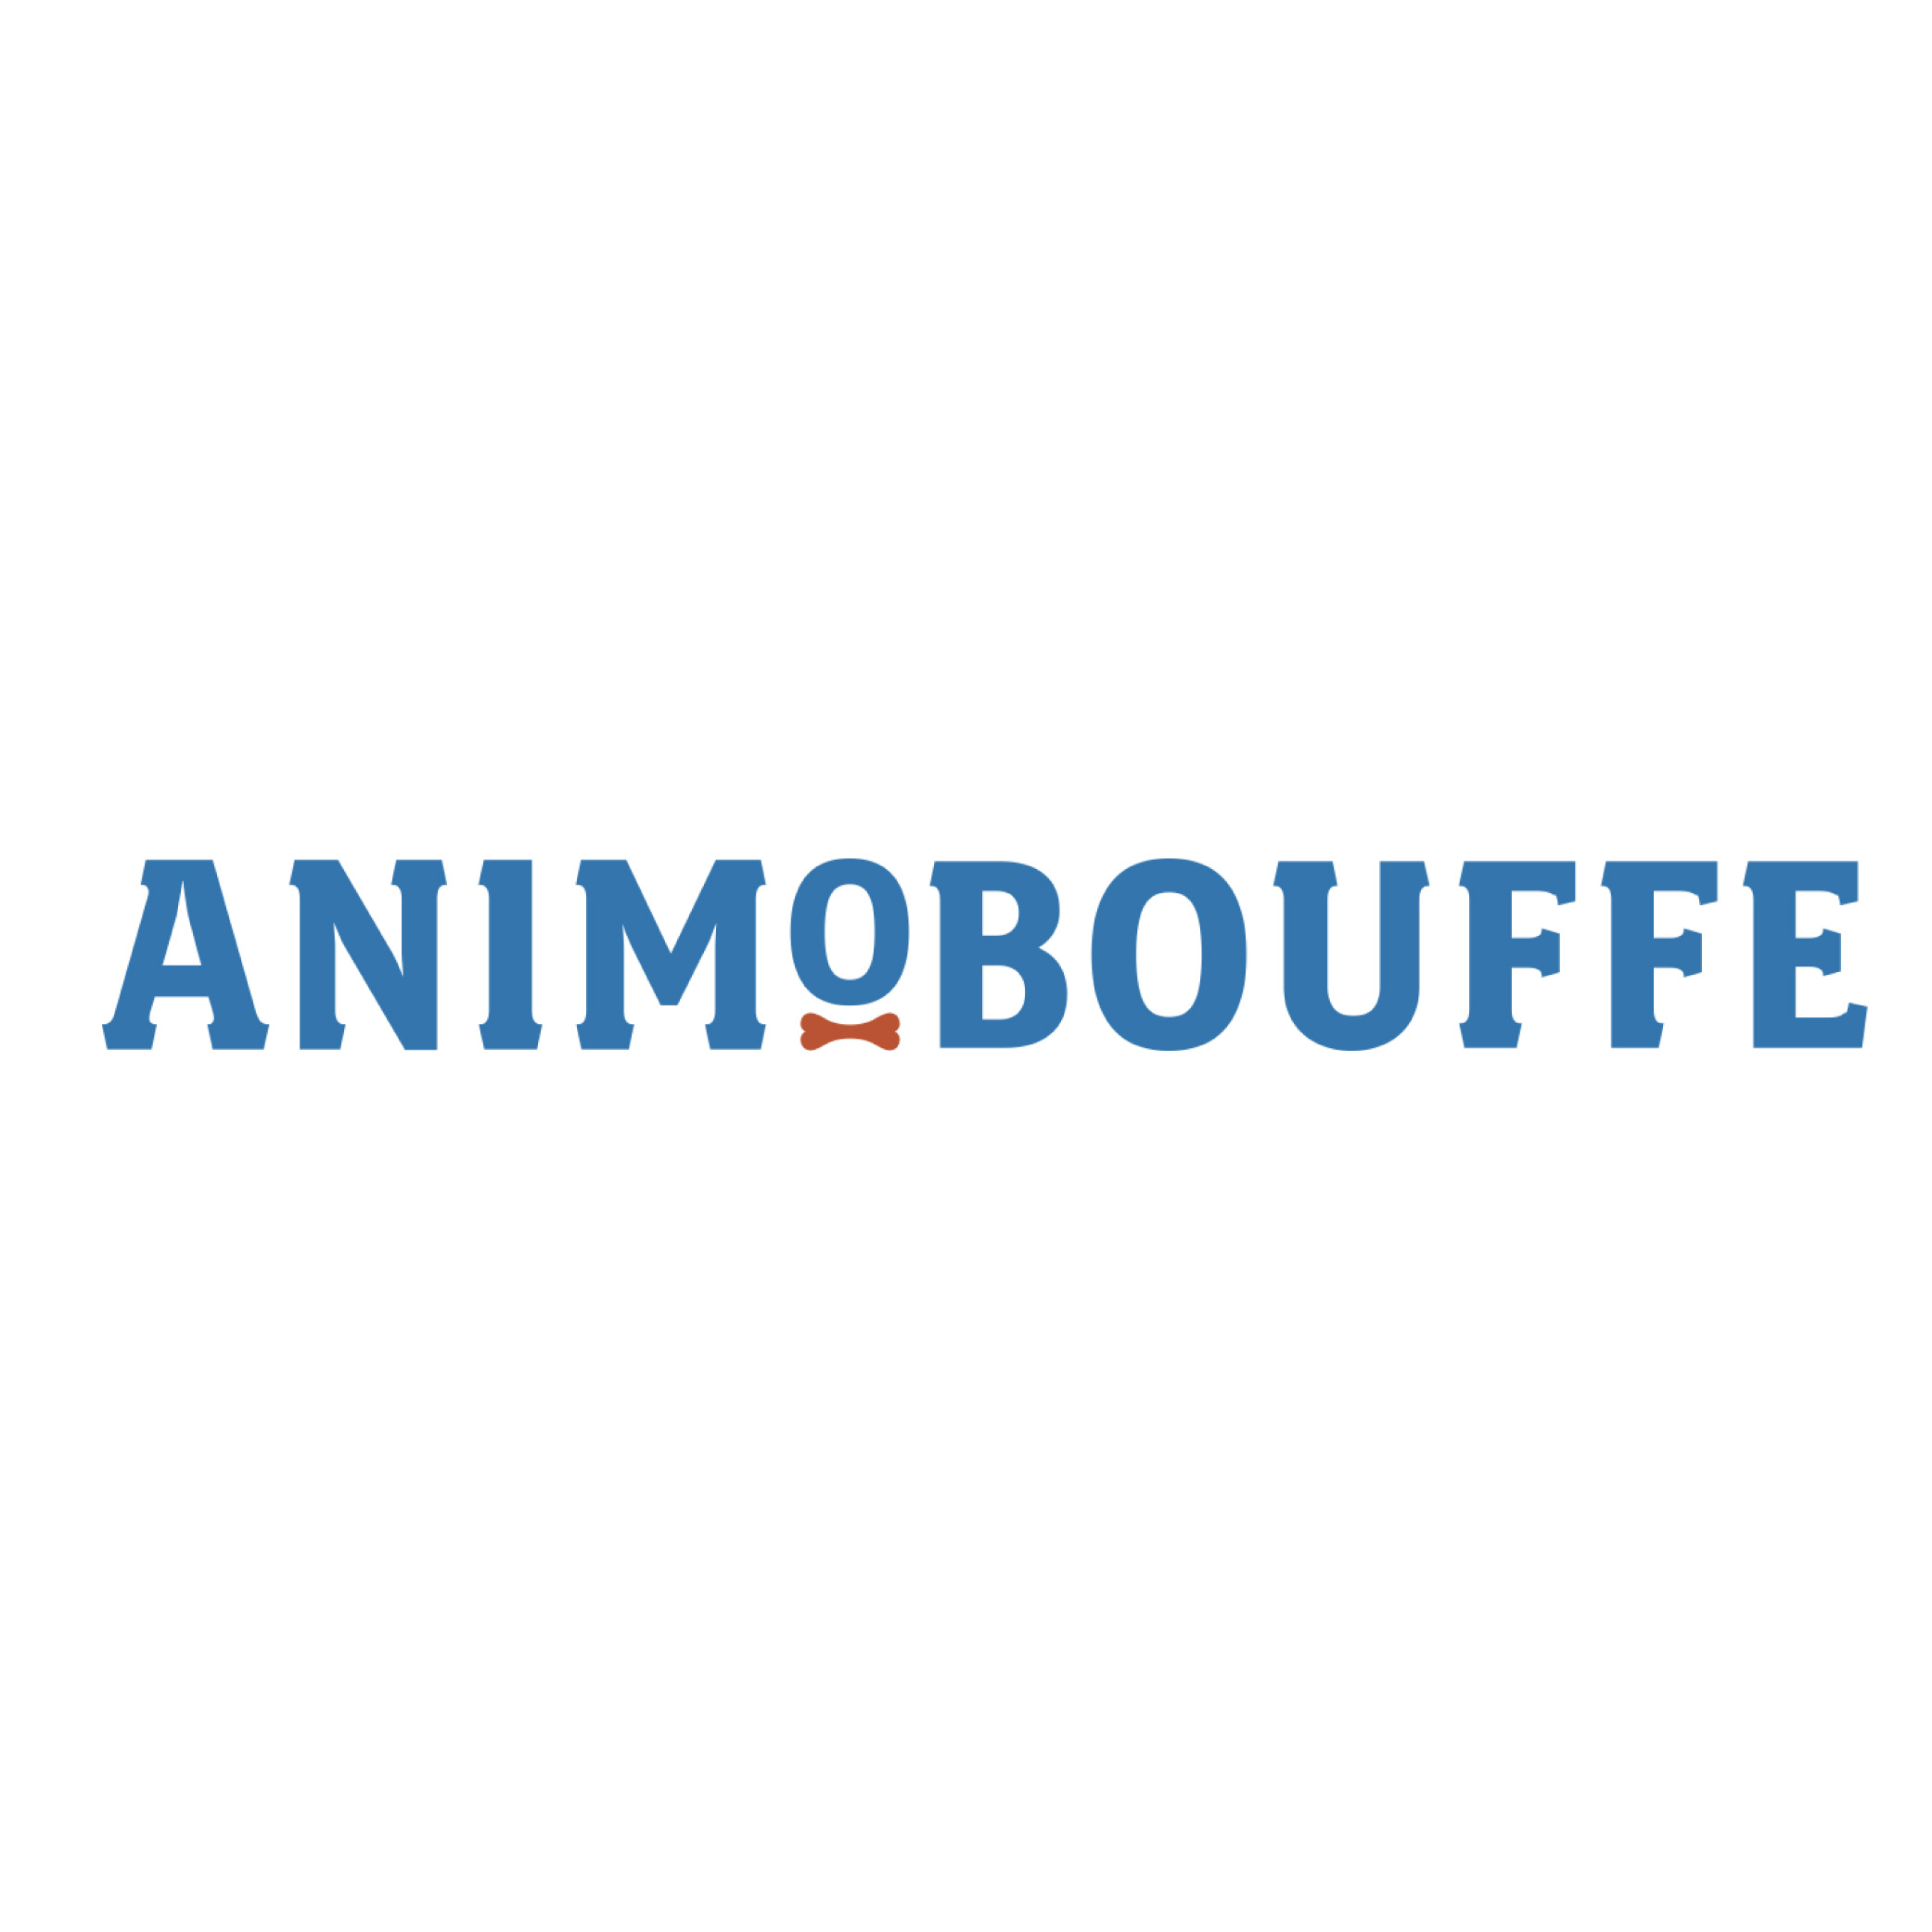 Animobouffe